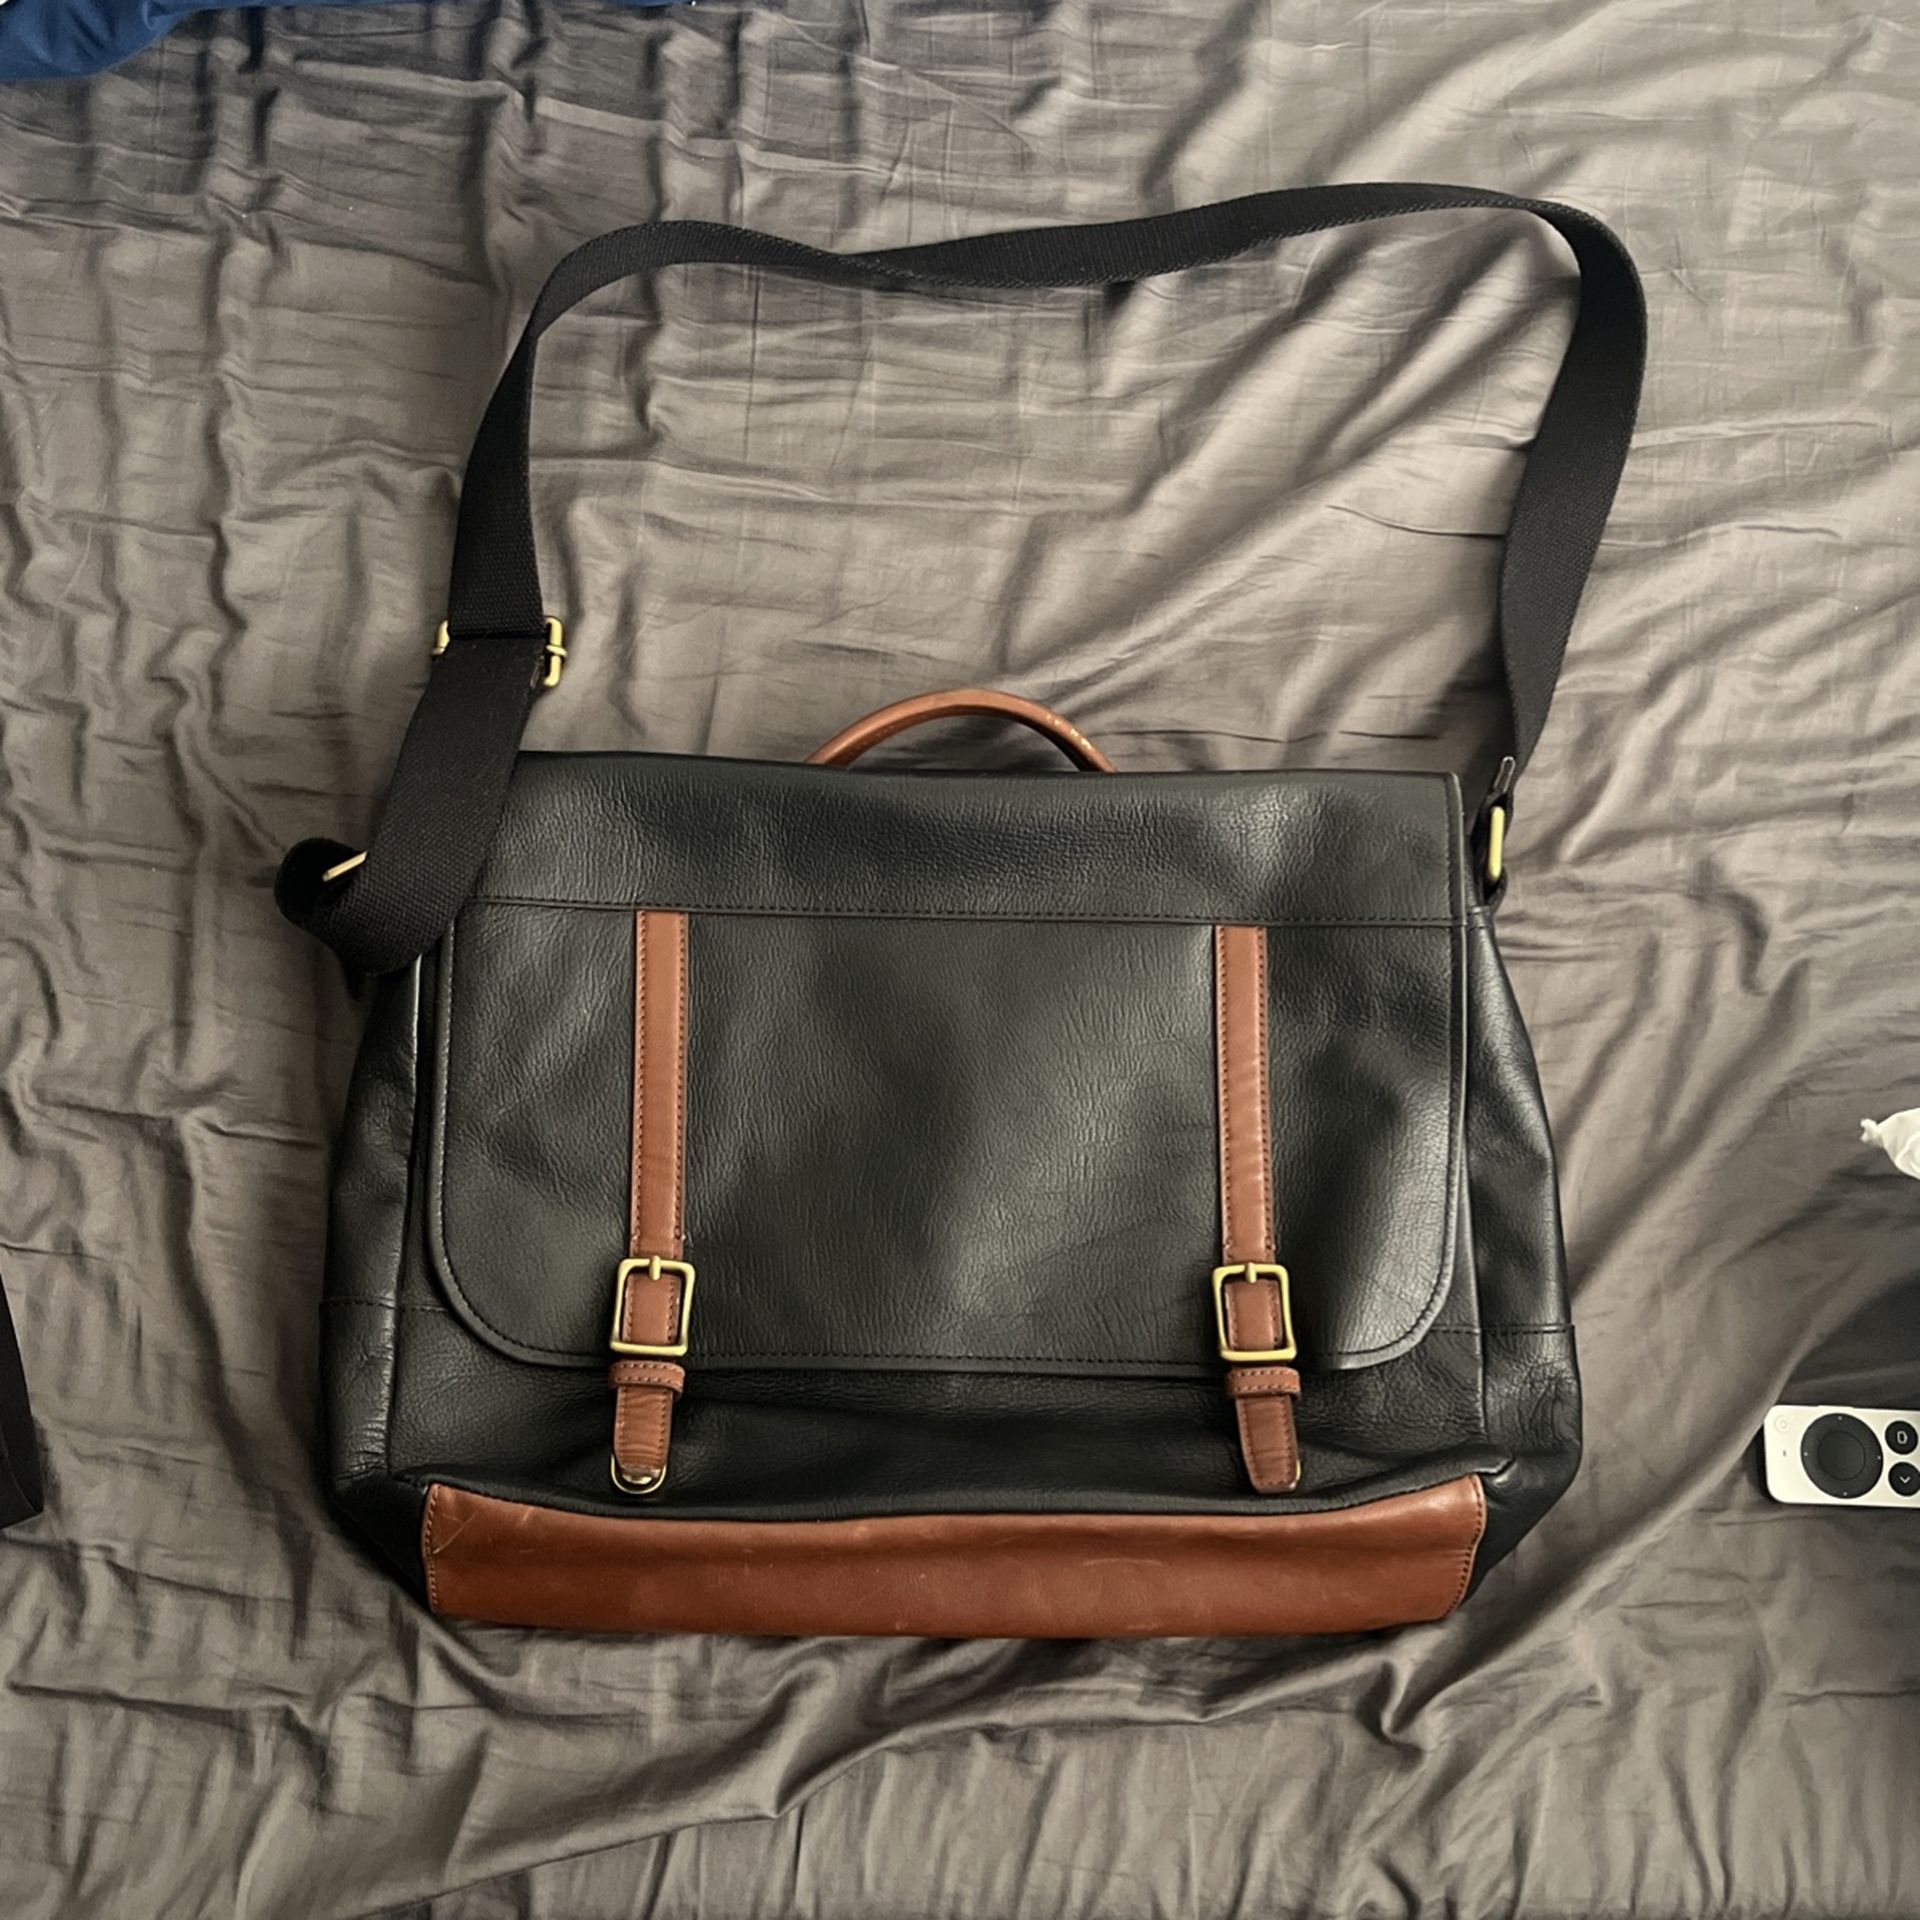 Fossil Leather Messenger Bag (original price $250)